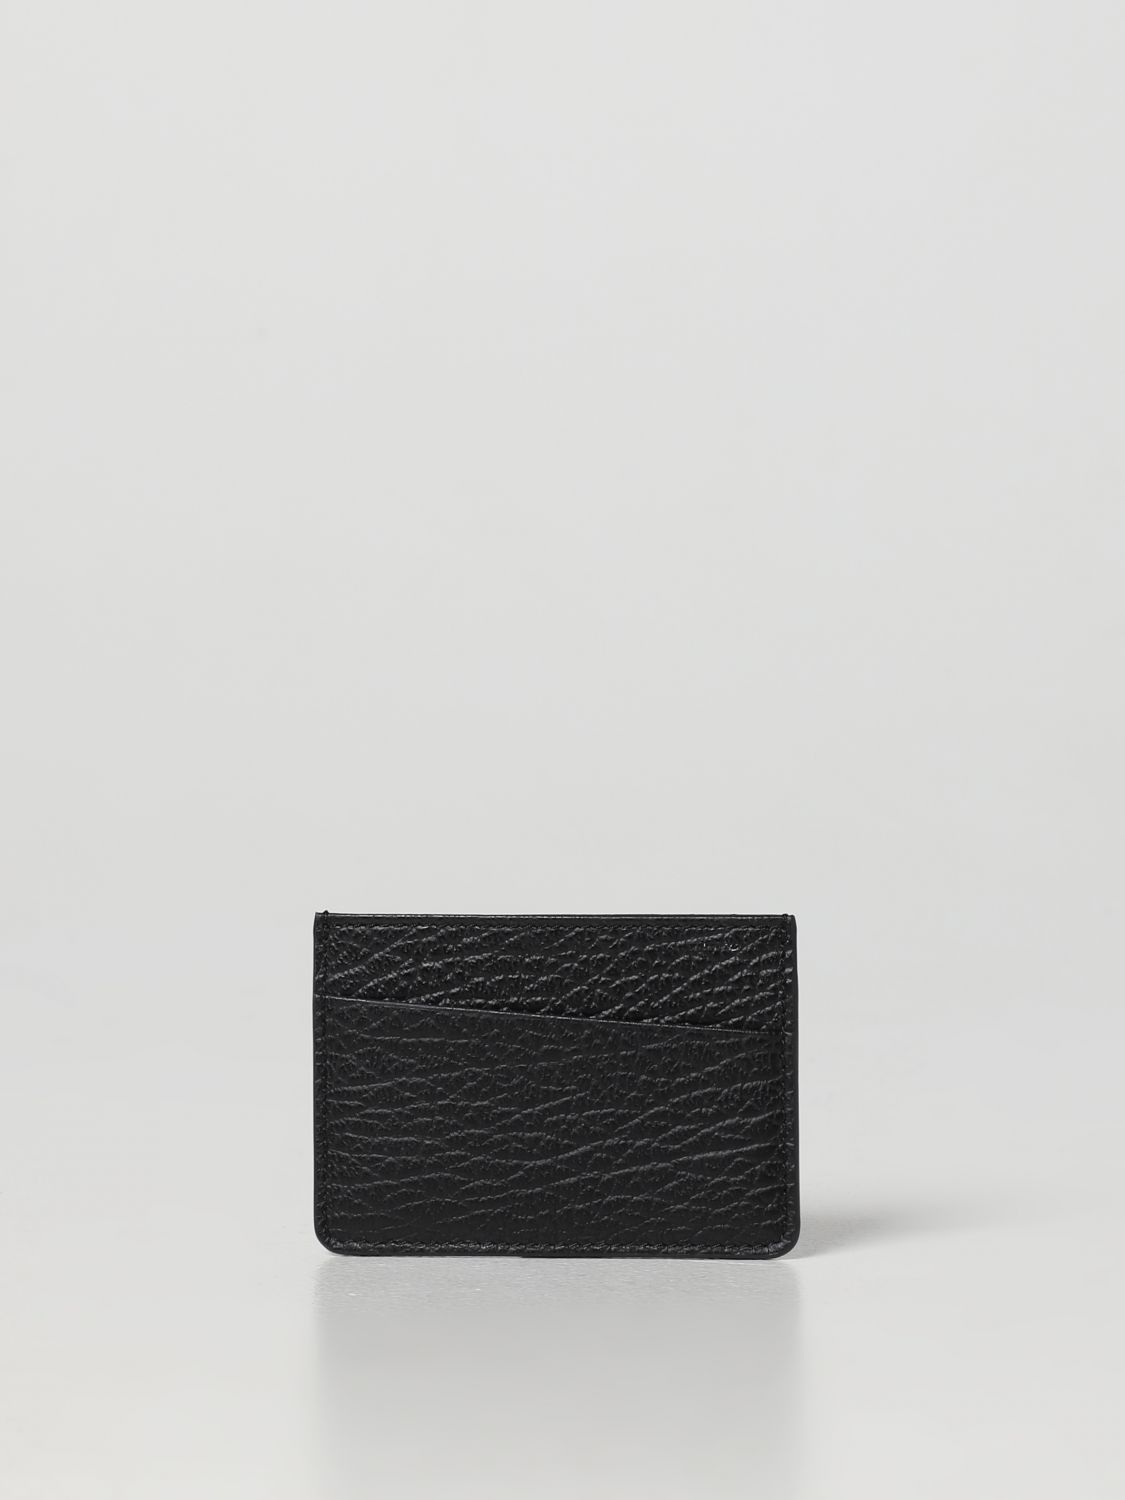 MAISON MARGIELA: wallet for man - Black | Maison Margiela wallet ...